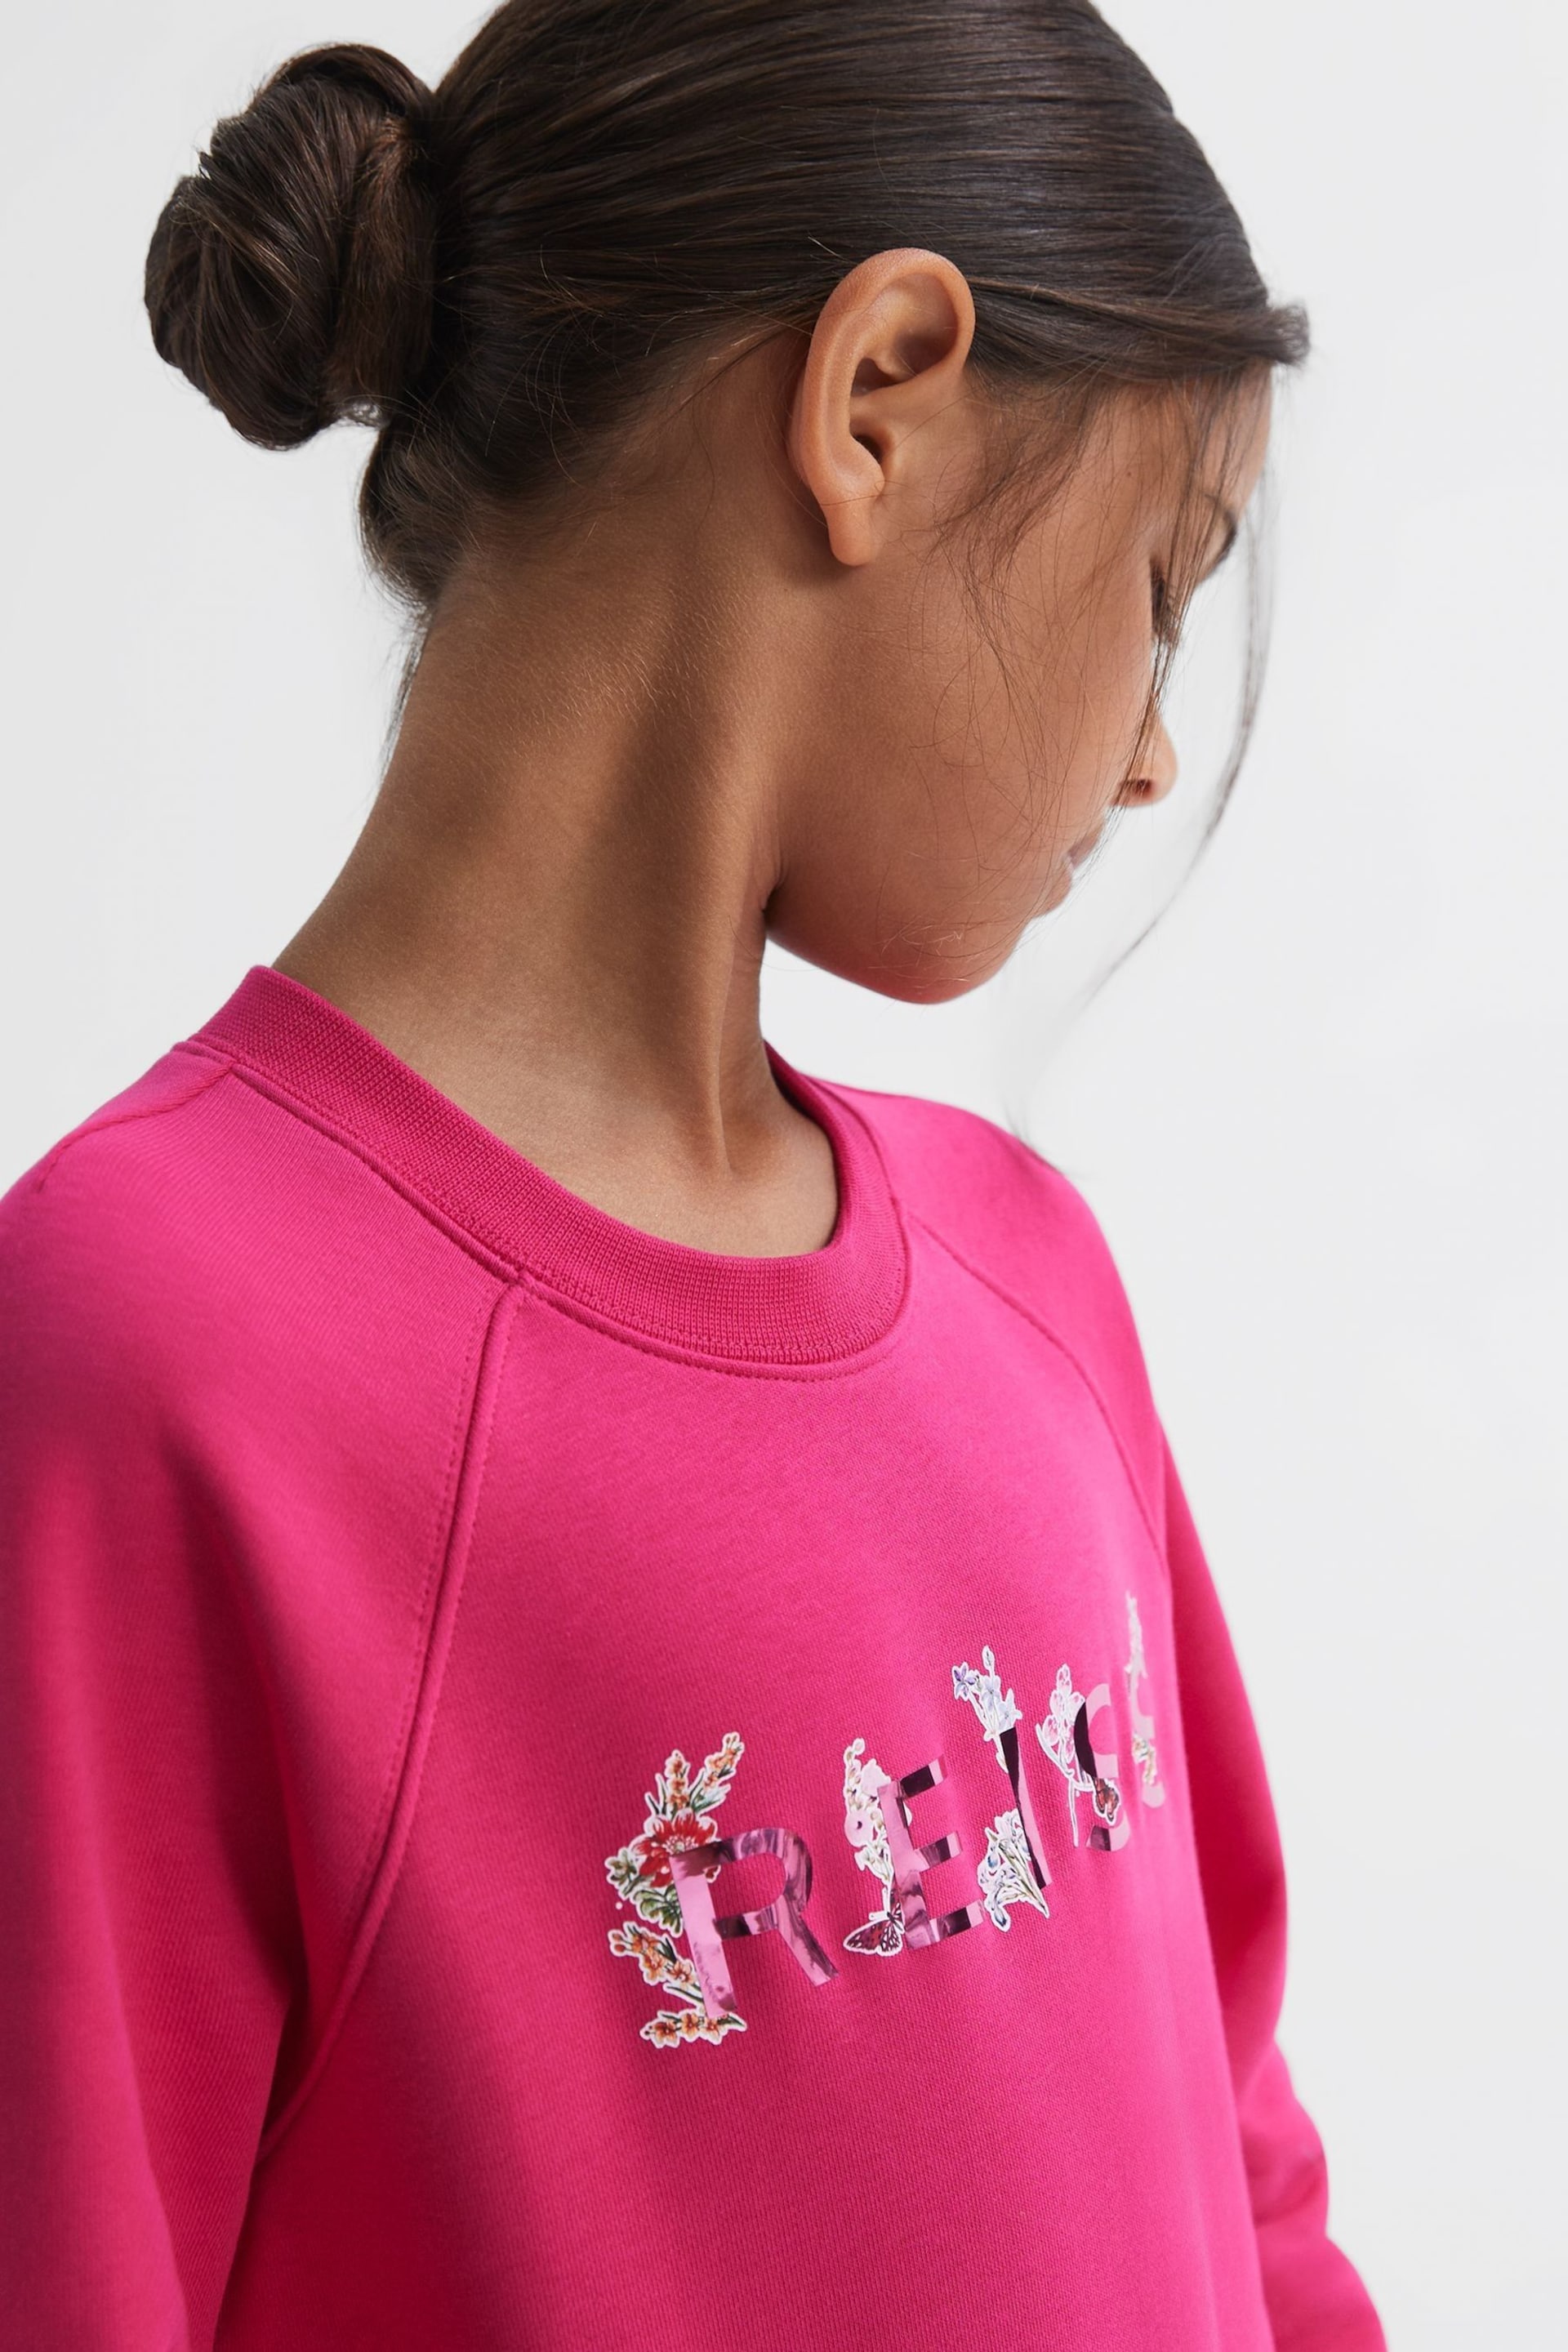 Reiss Pink Janine Junior Sweatshirt Dress - Image 4 of 6